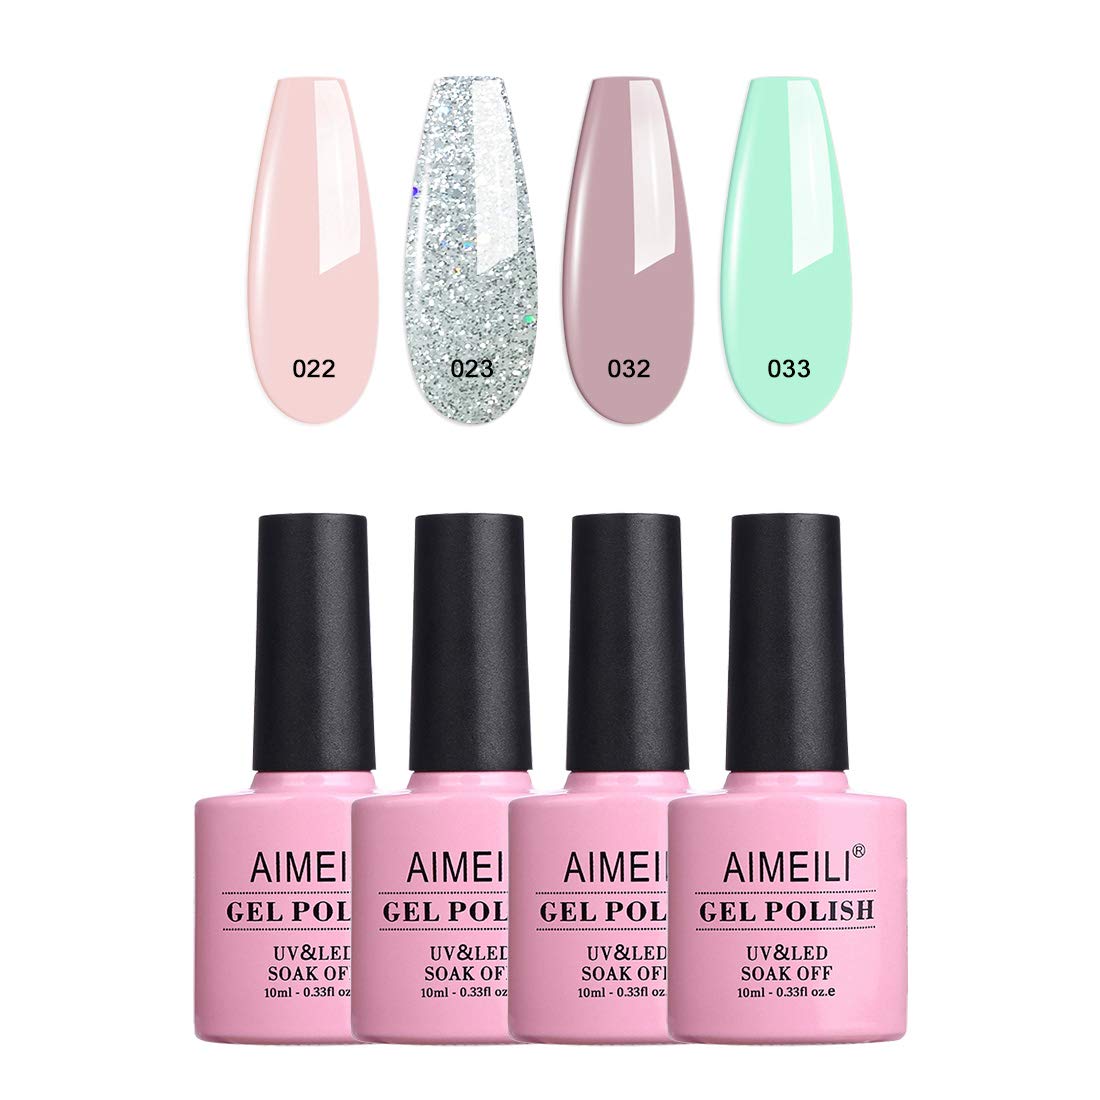 AIMEILI Soak Off U V LED Nude Gel Nail Polish Natural Sheer Pink Nail Polish Gel Set Of 4pcs X 10ml - Kit Set 17